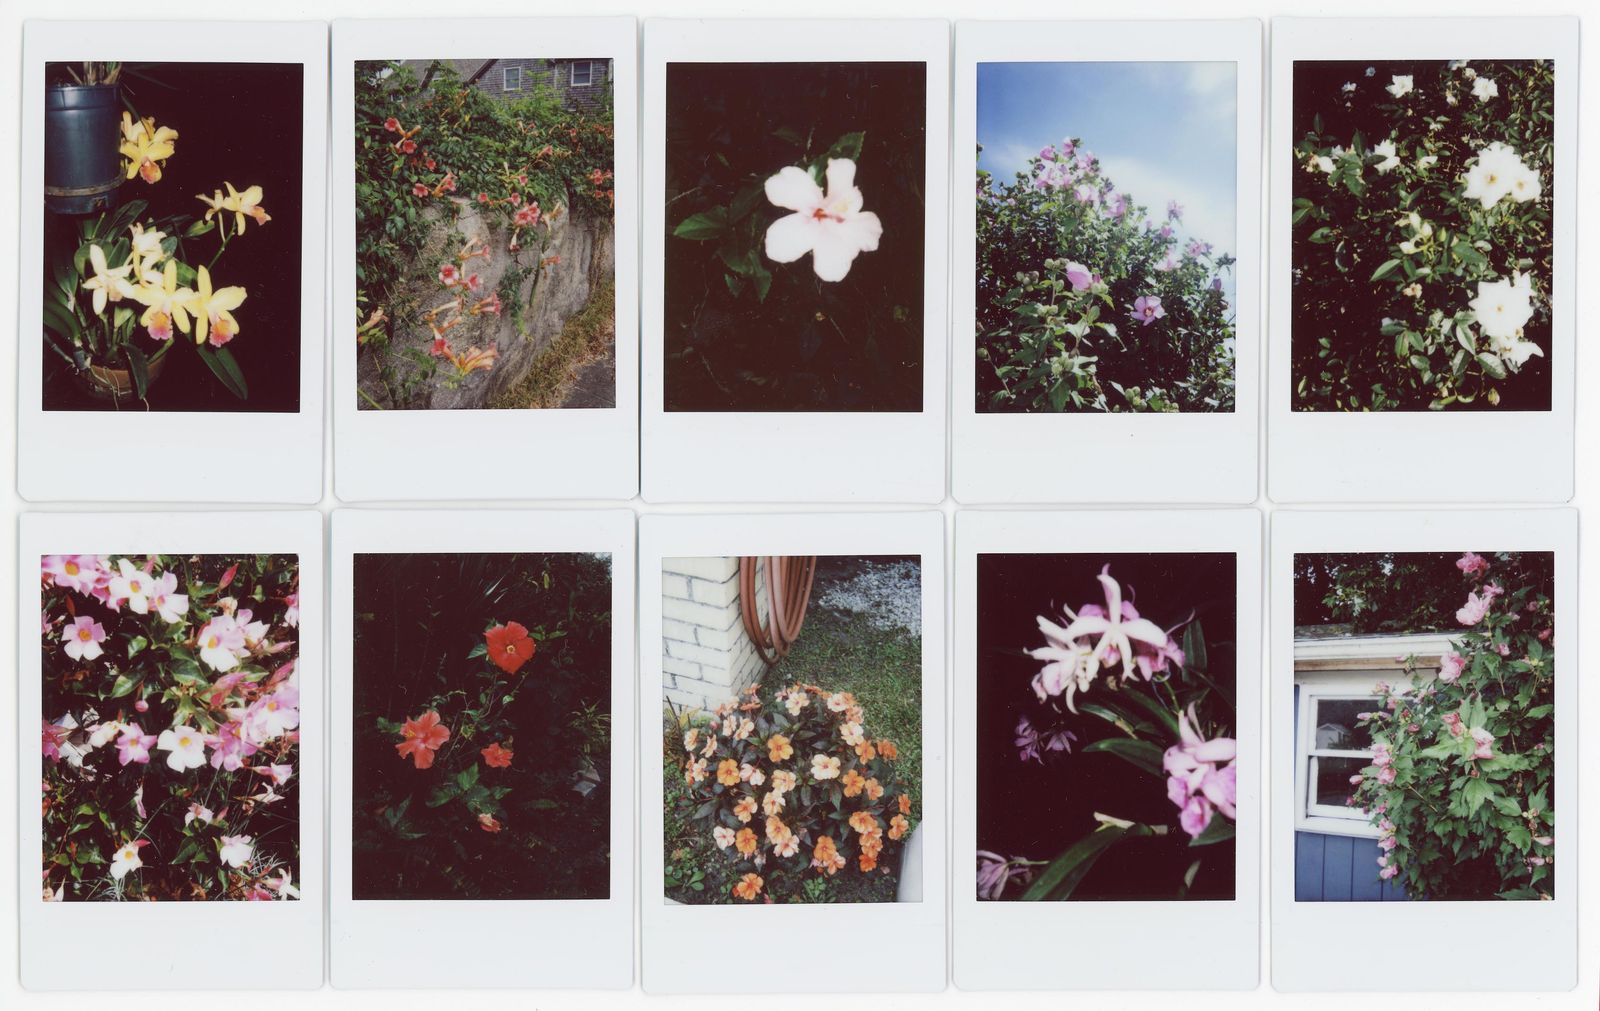 © RACHEL TREIDE - "A Minute Fraction of All the Flowers I've Ever Seen," photographs 41-50